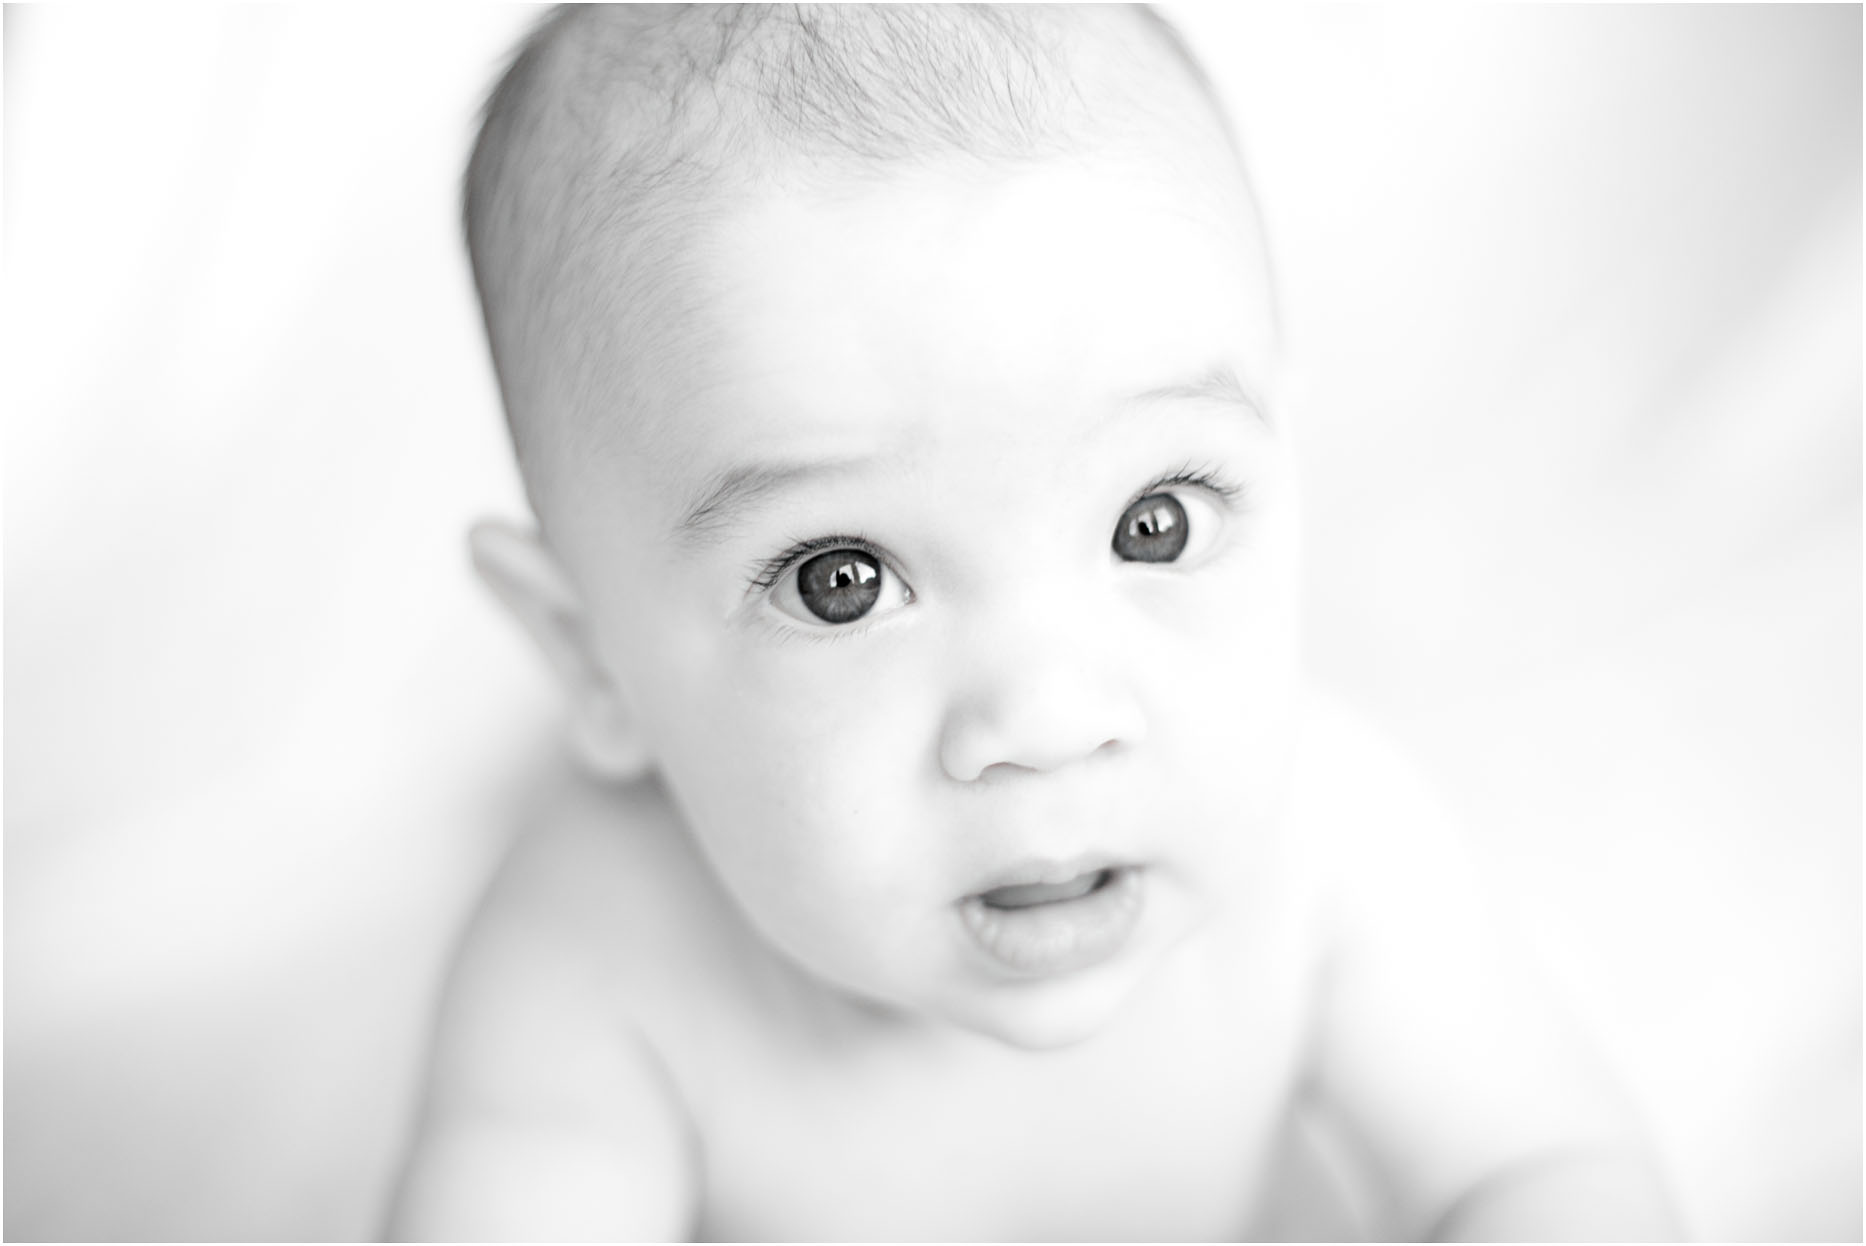 06-kids-babies-blainebethanyphotography-DUP1.jpg